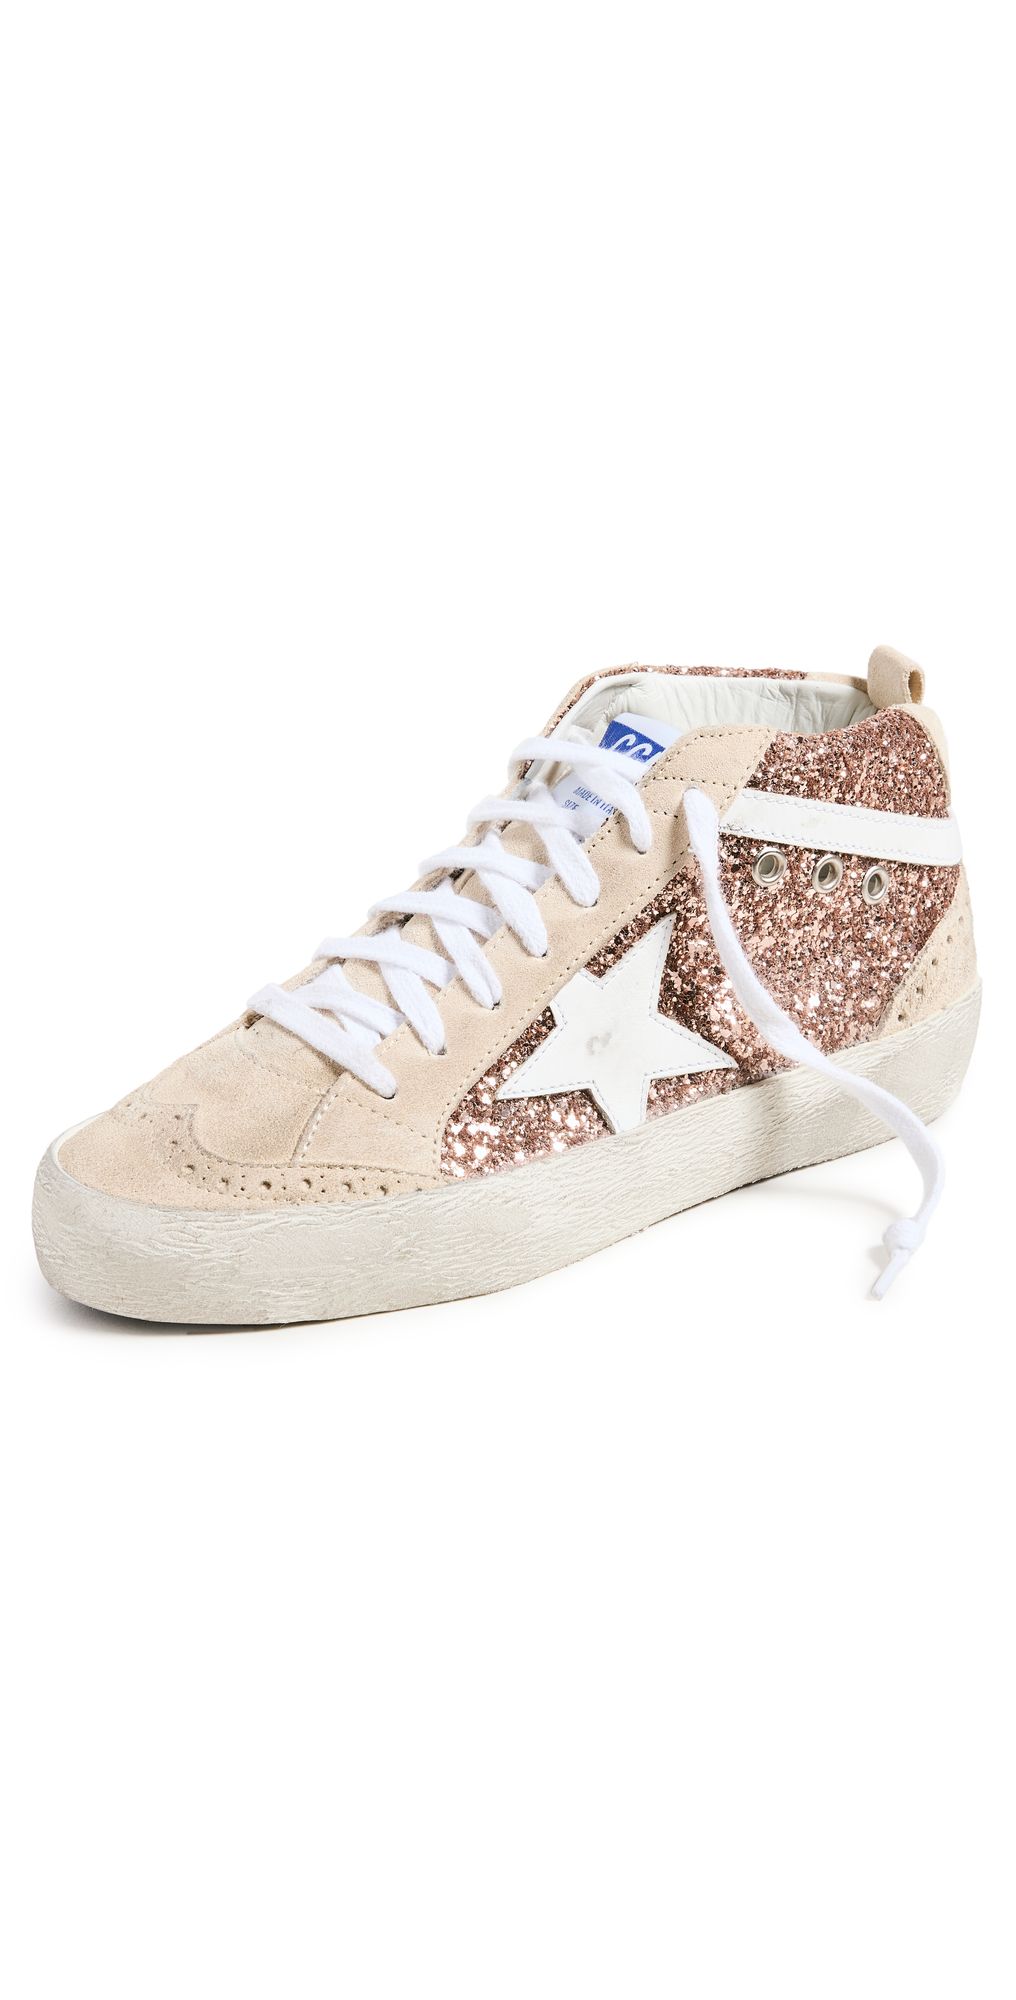 Golden Goose Mid Star Glitter Upper Leather Star Sneakers | Shopbop